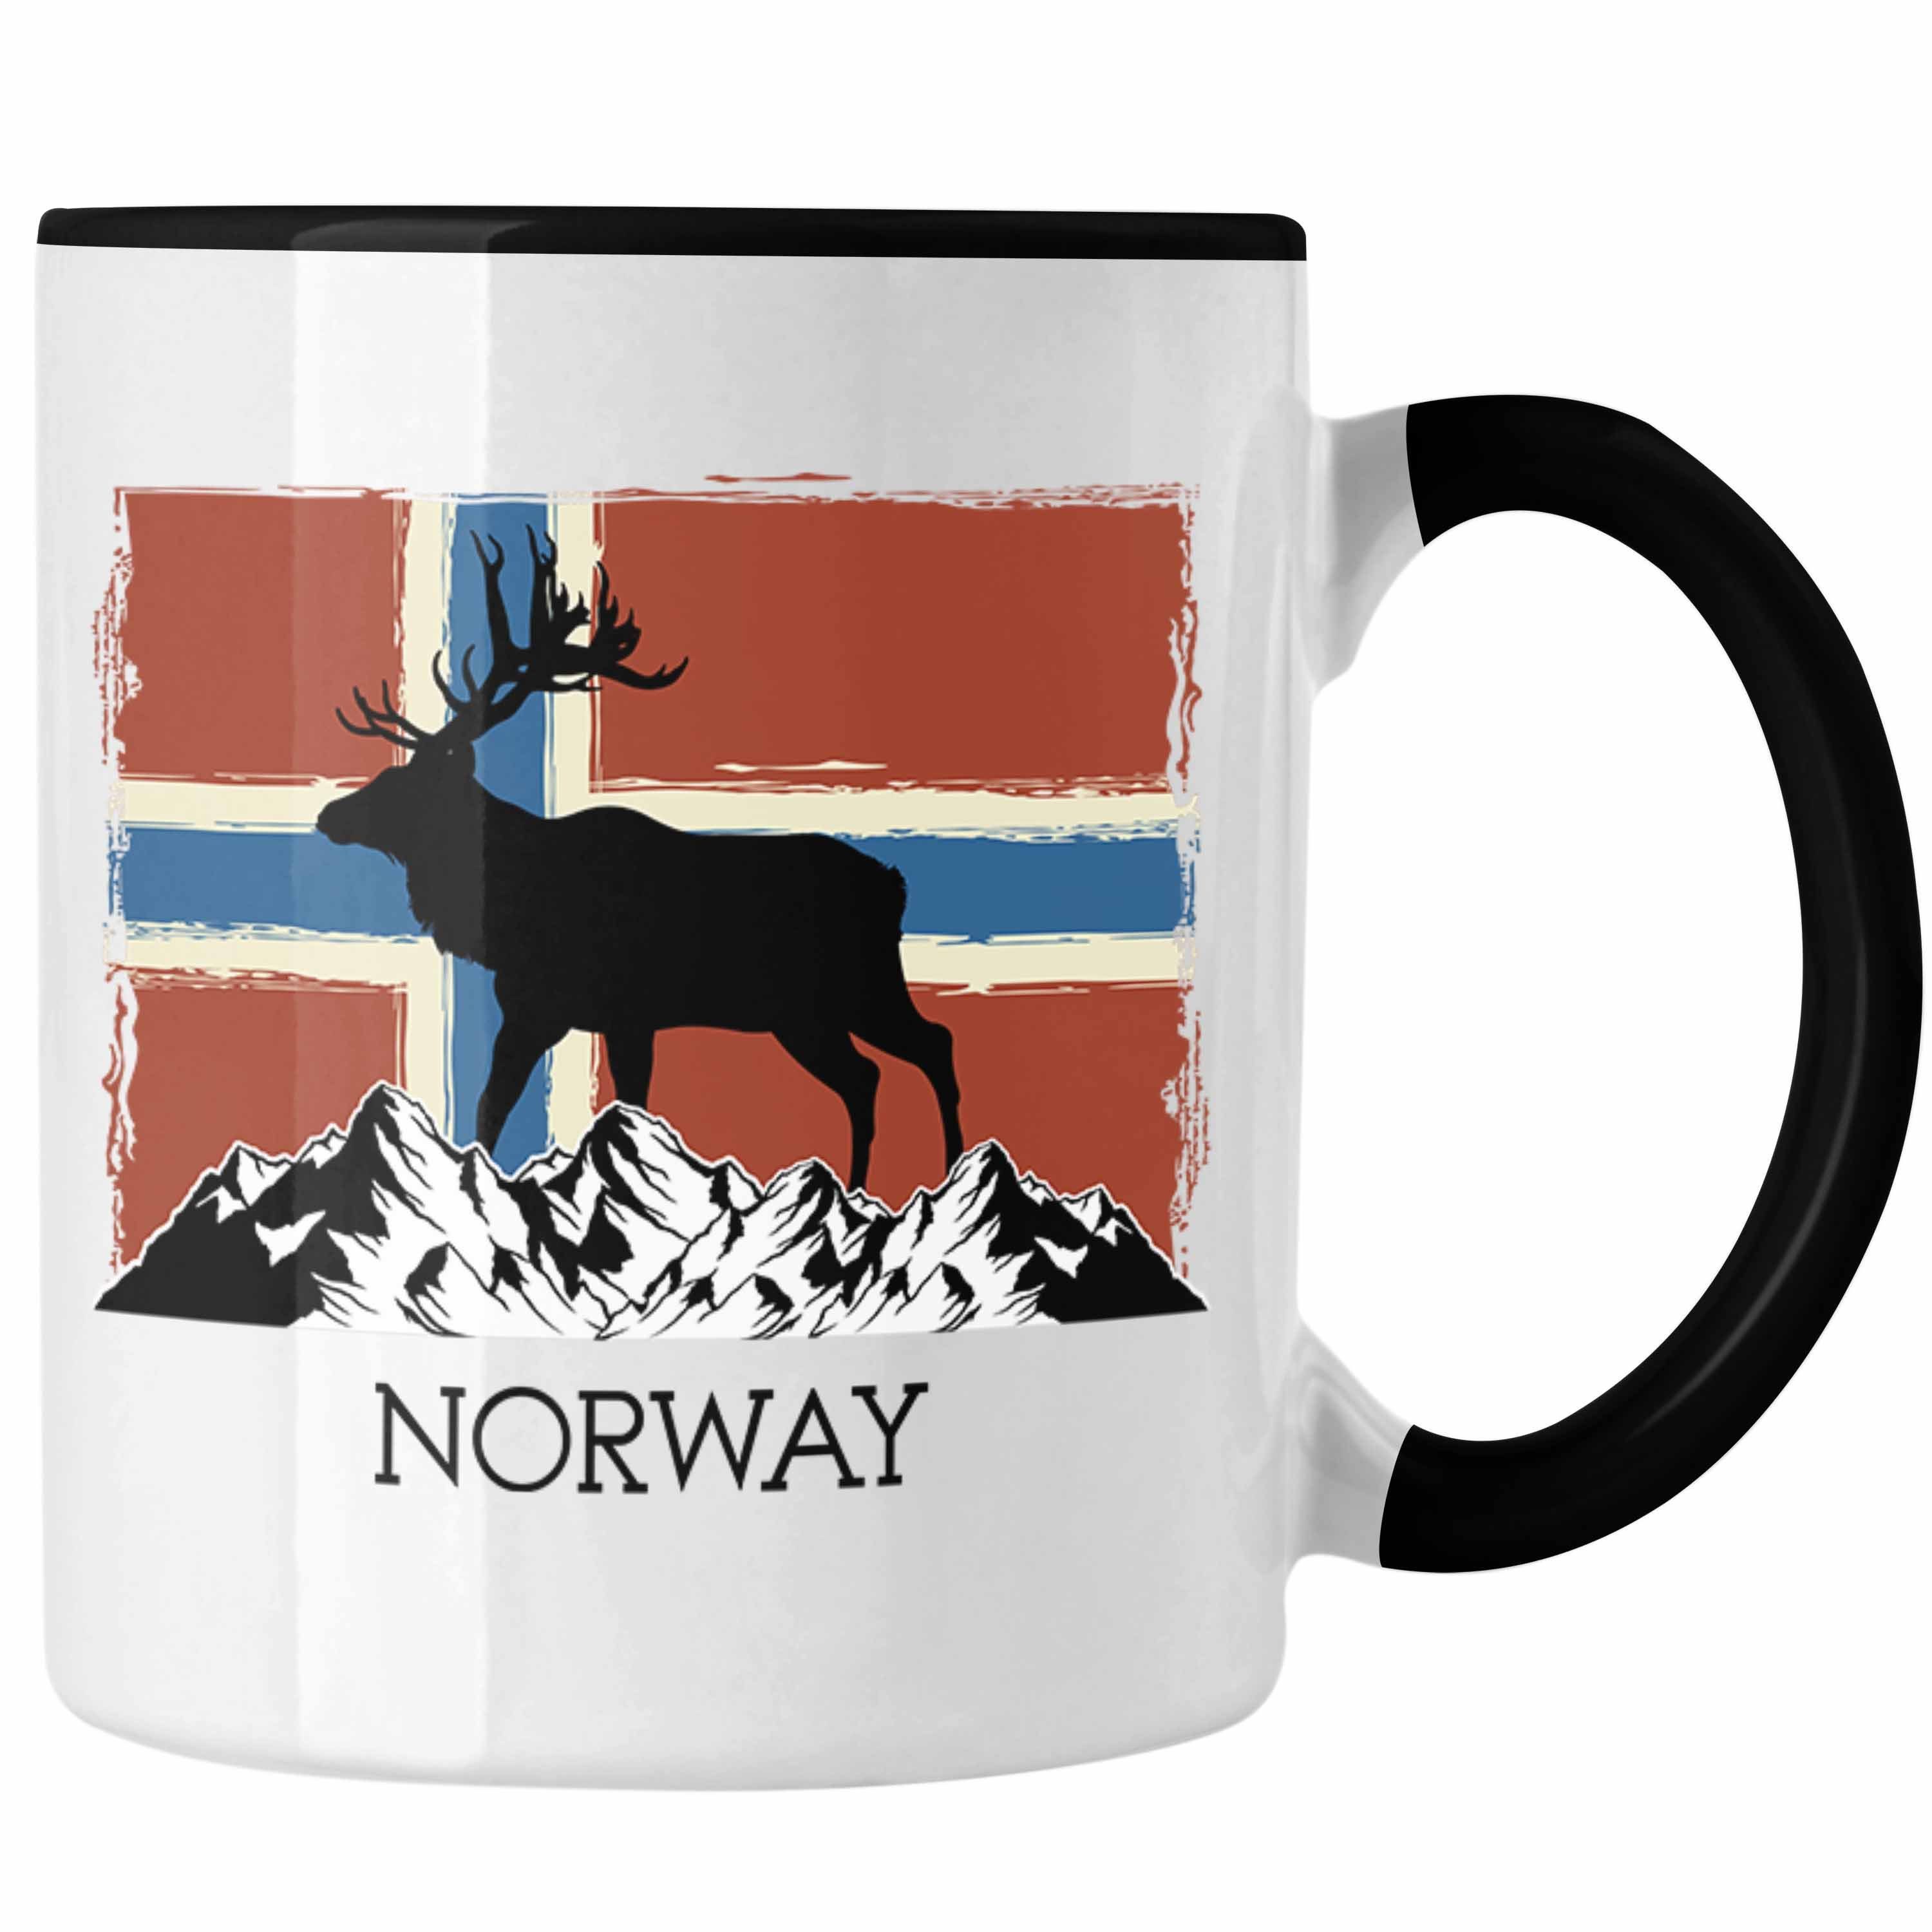 Trendation Tasse Trendation - Norwegen Geschenke Tasse Flagge Nordkap Elch Norway Schwarz